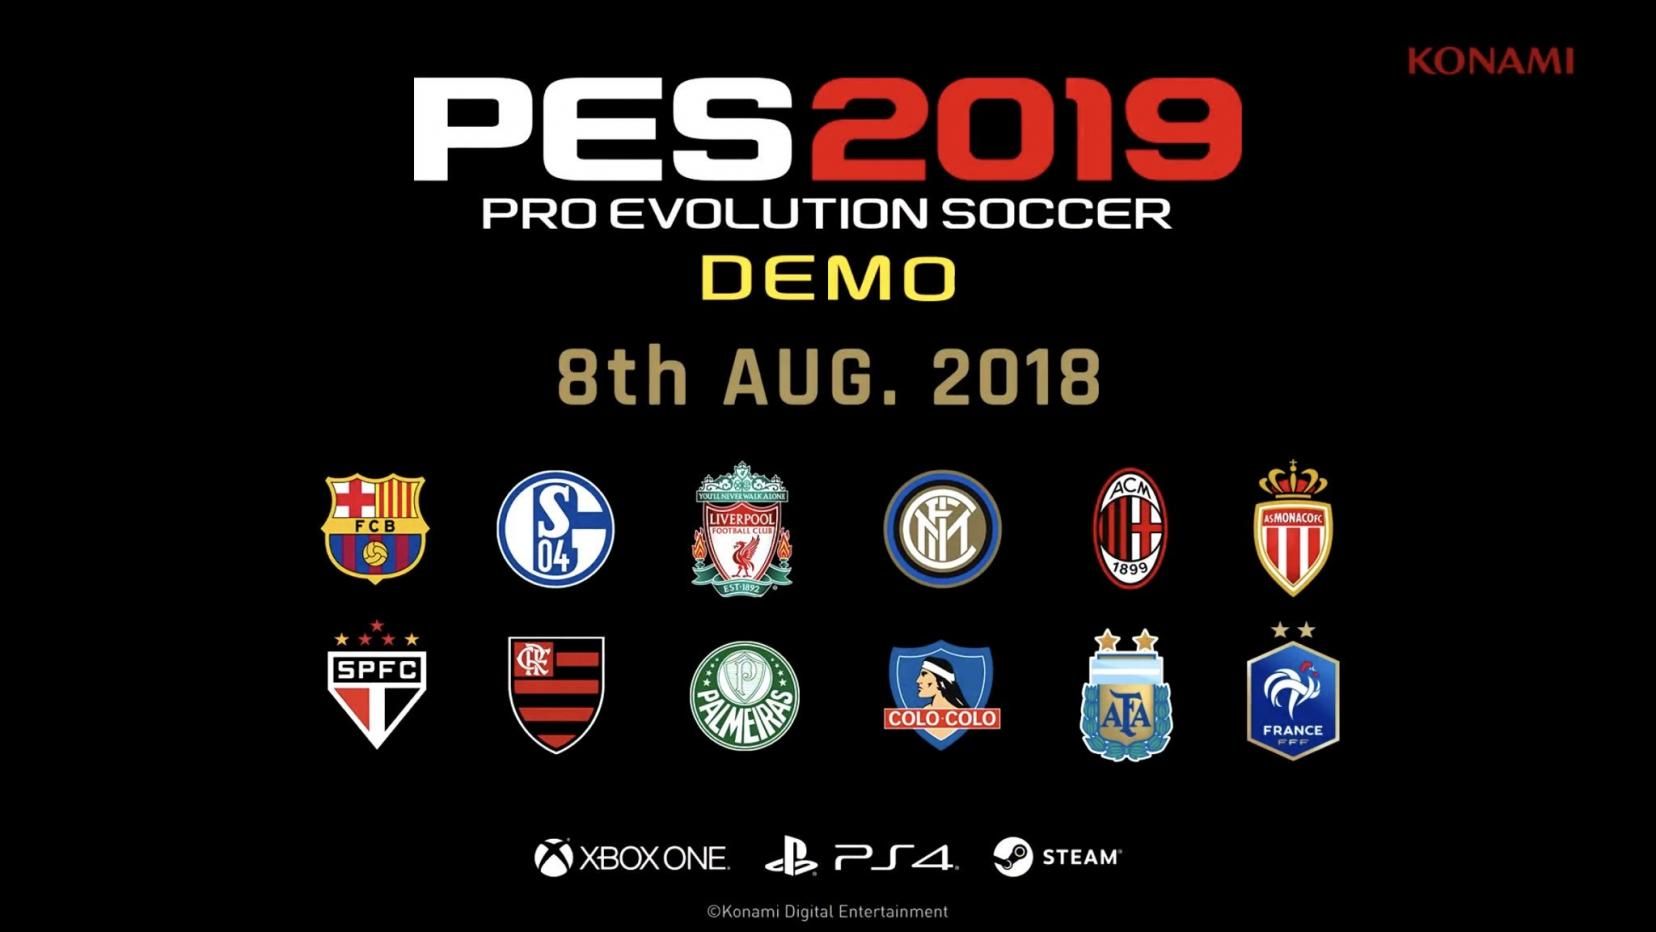 pro evolution soccer 2019 review egm